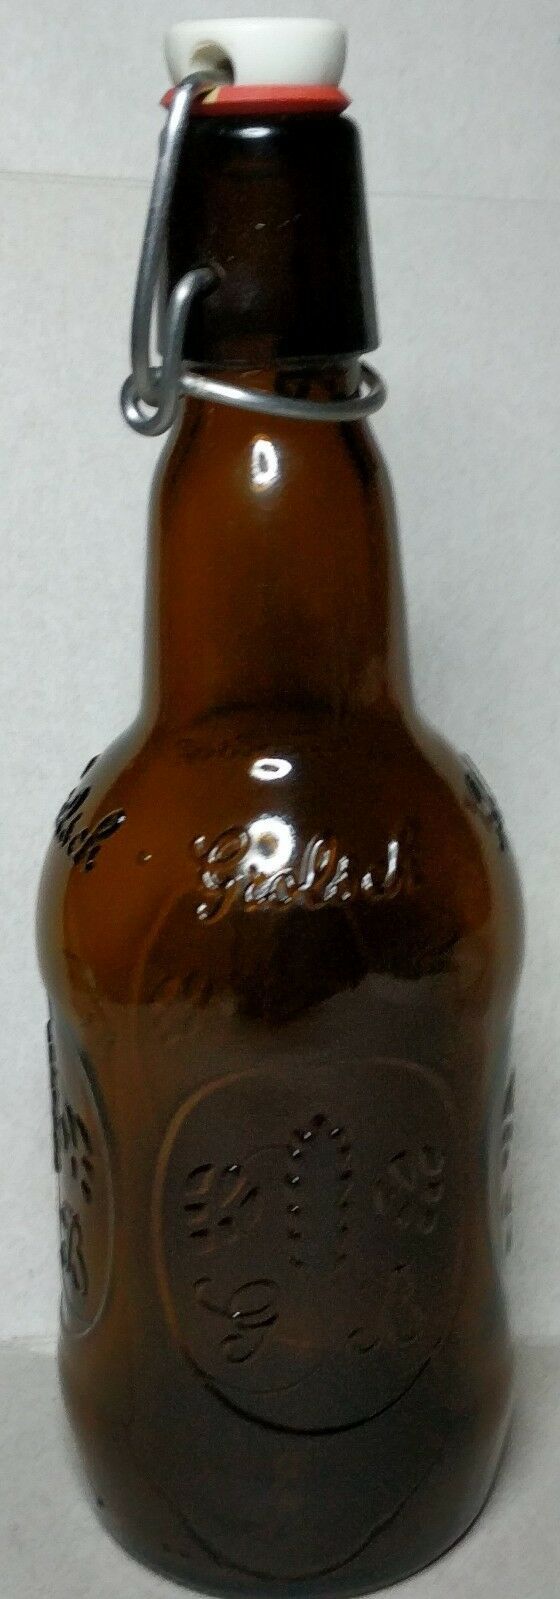 Grolsch Lager Bottle, excellent condition, empty - $7.87